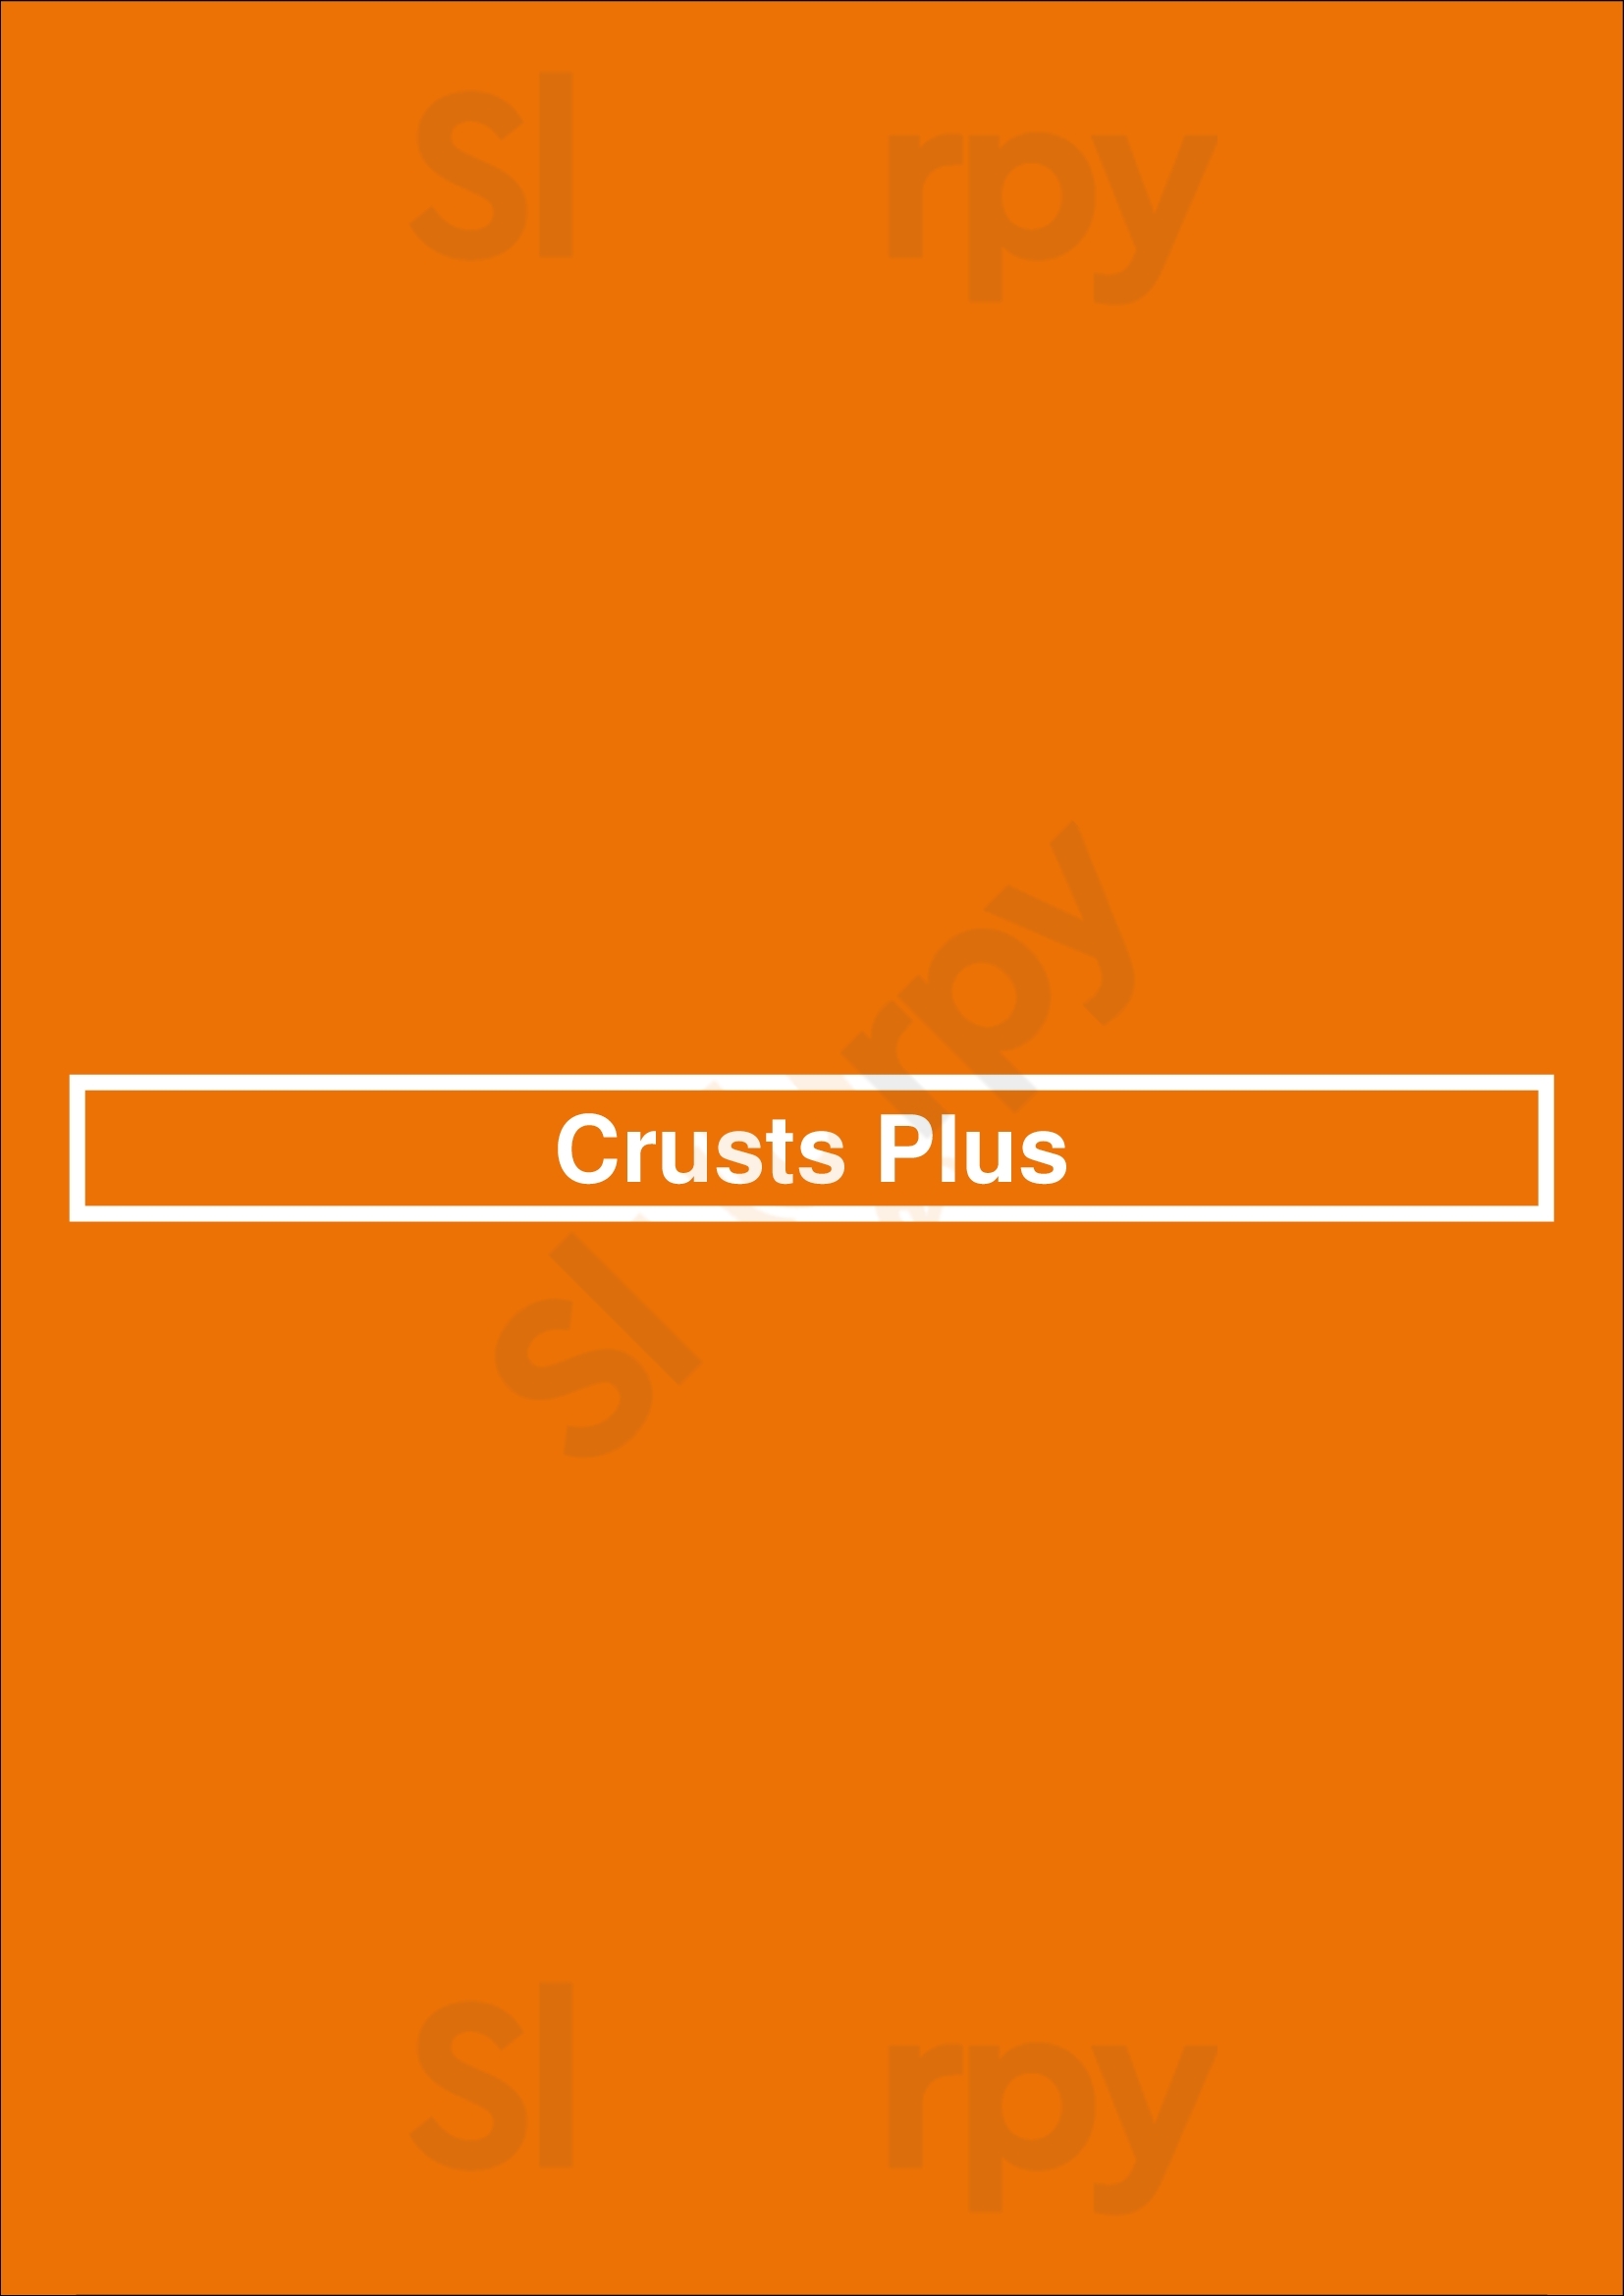 Crusts Plus Swansea Menu - 1